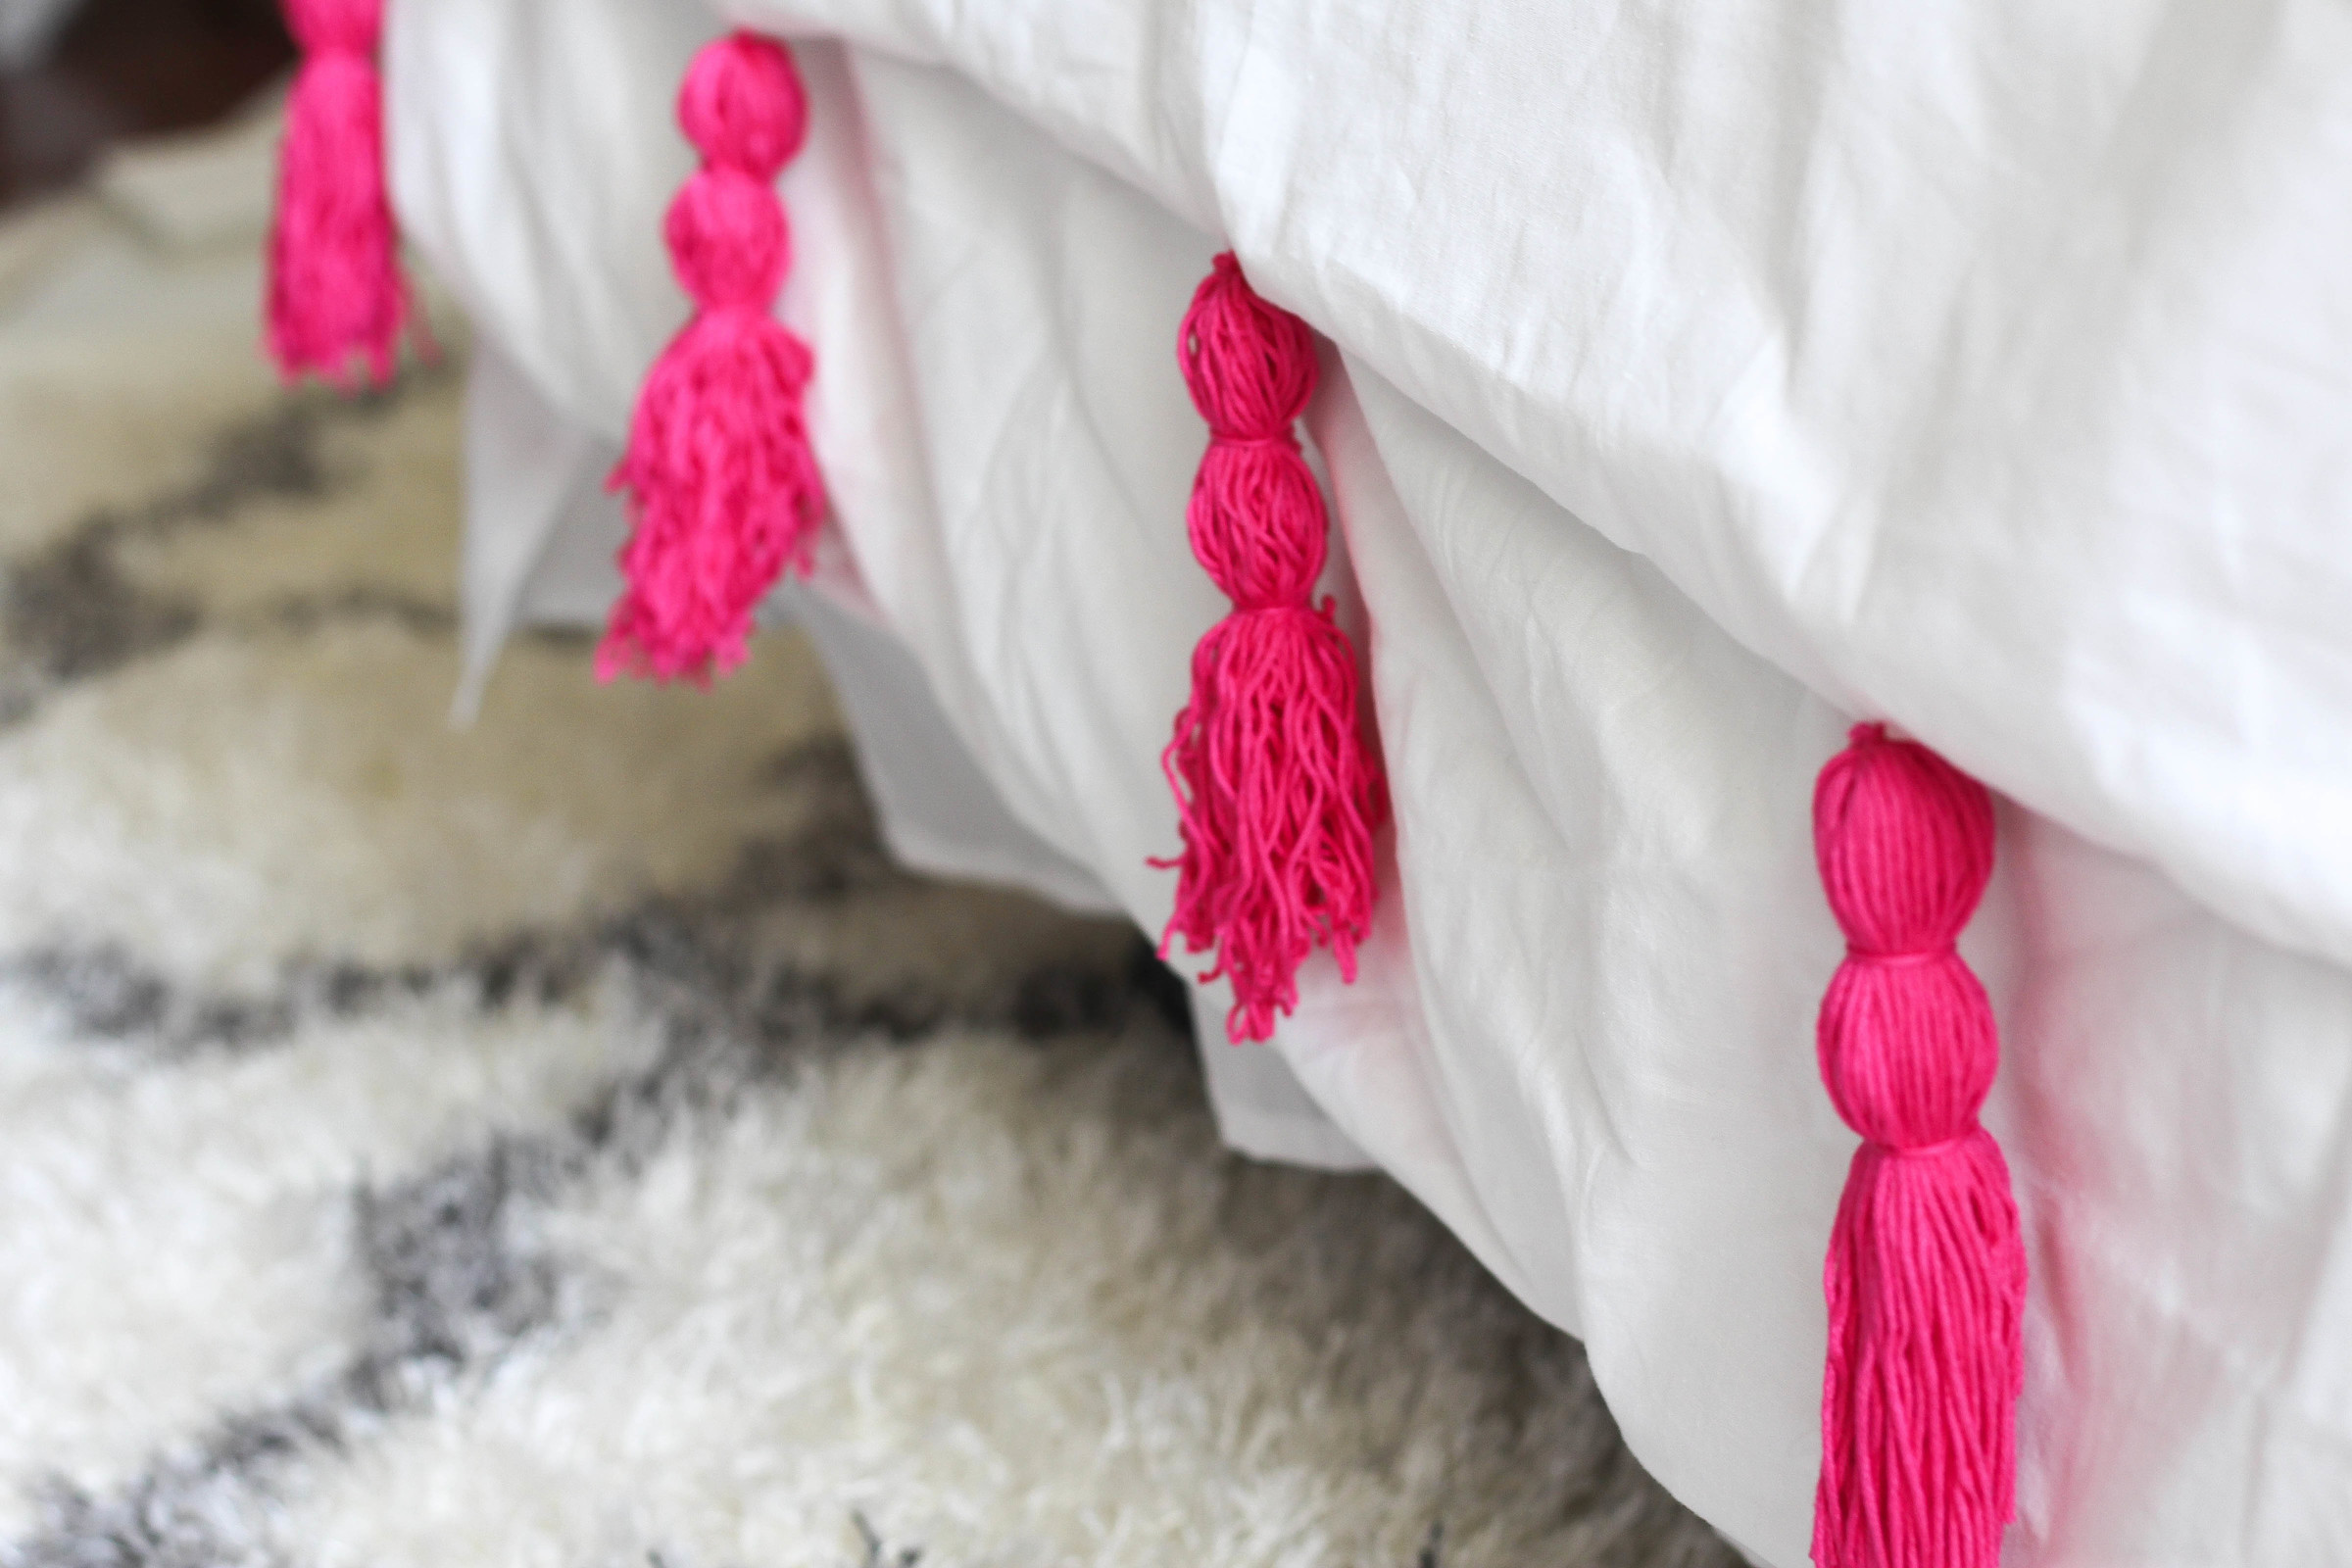 DIY Tassel decor bedding and crafts Tassel decor for dorm room by lauren lindmark on daily dose of charm